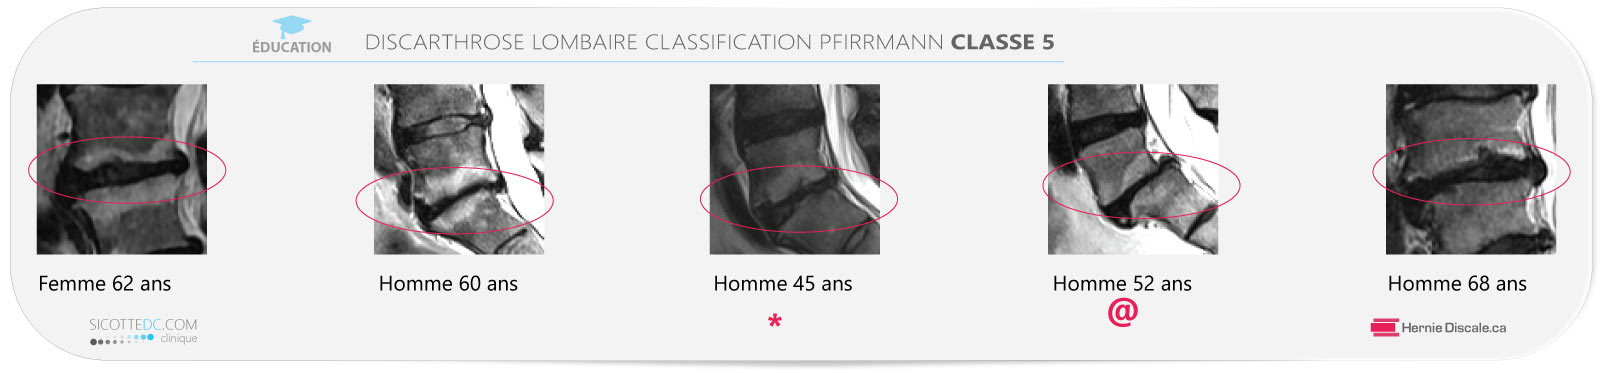 Example discarthrose lombaire classification Pfirrmann classe 5